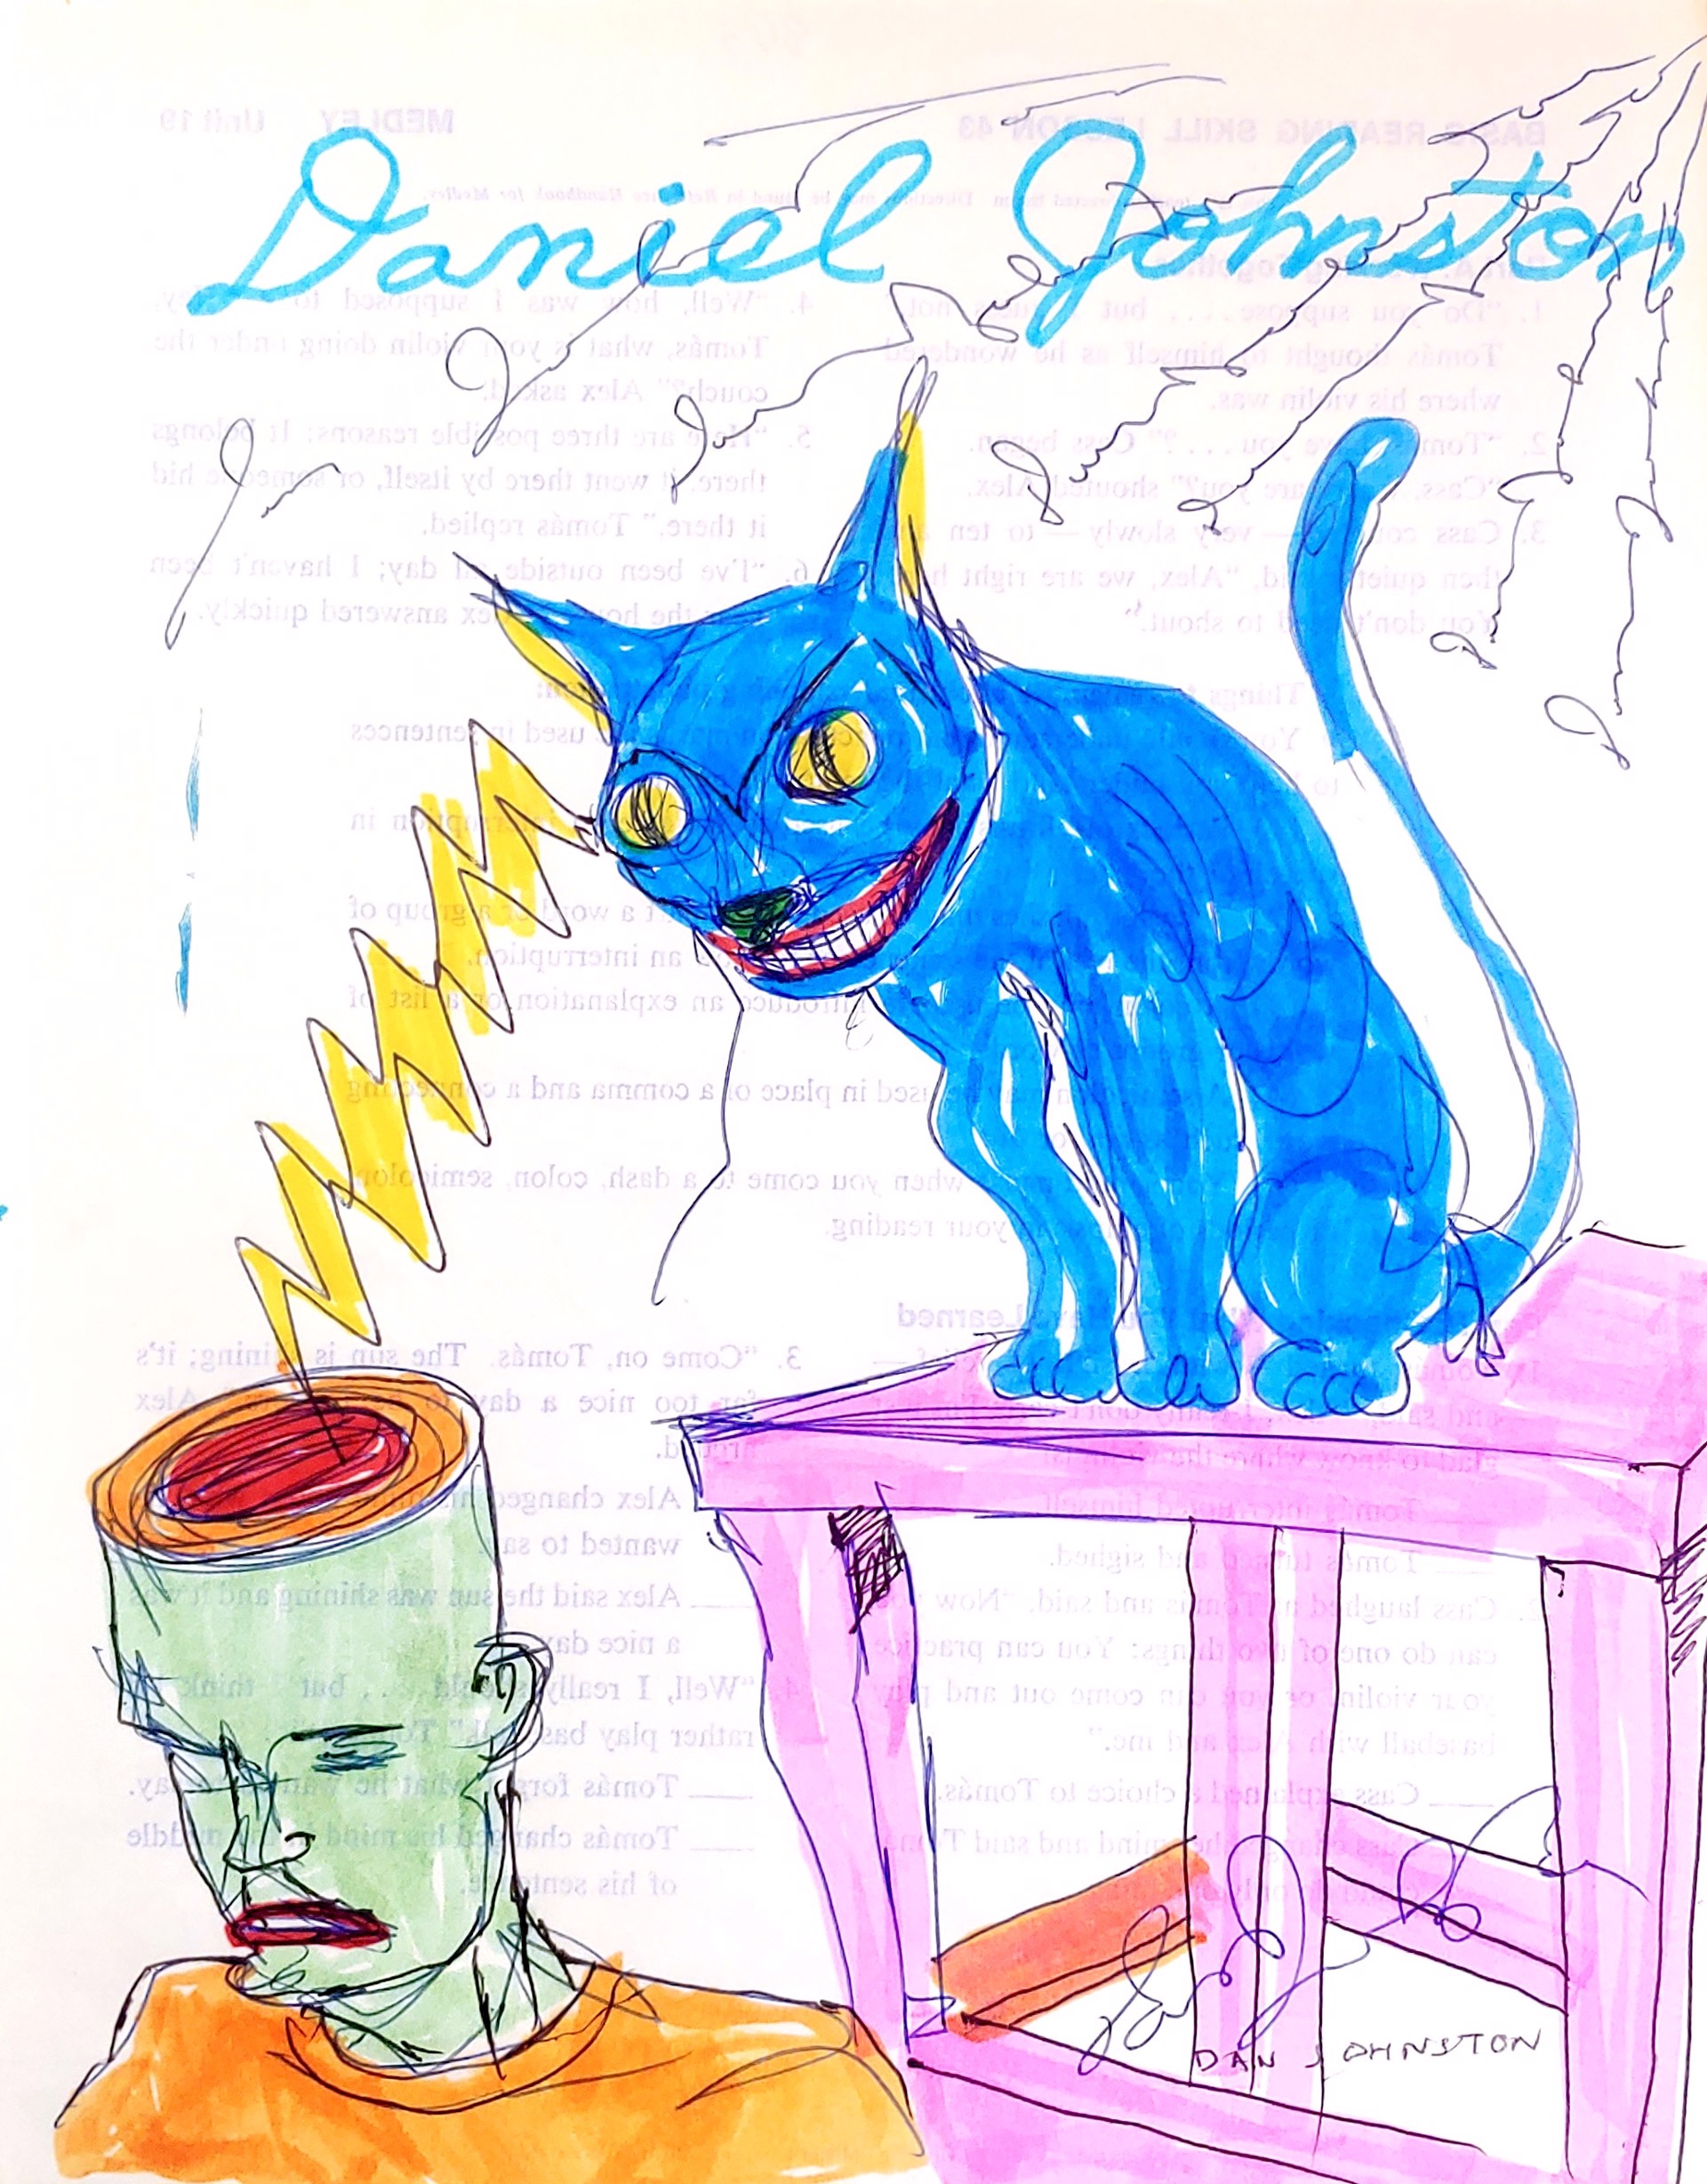 Cat with Bolt Eye by Daniel Johnston